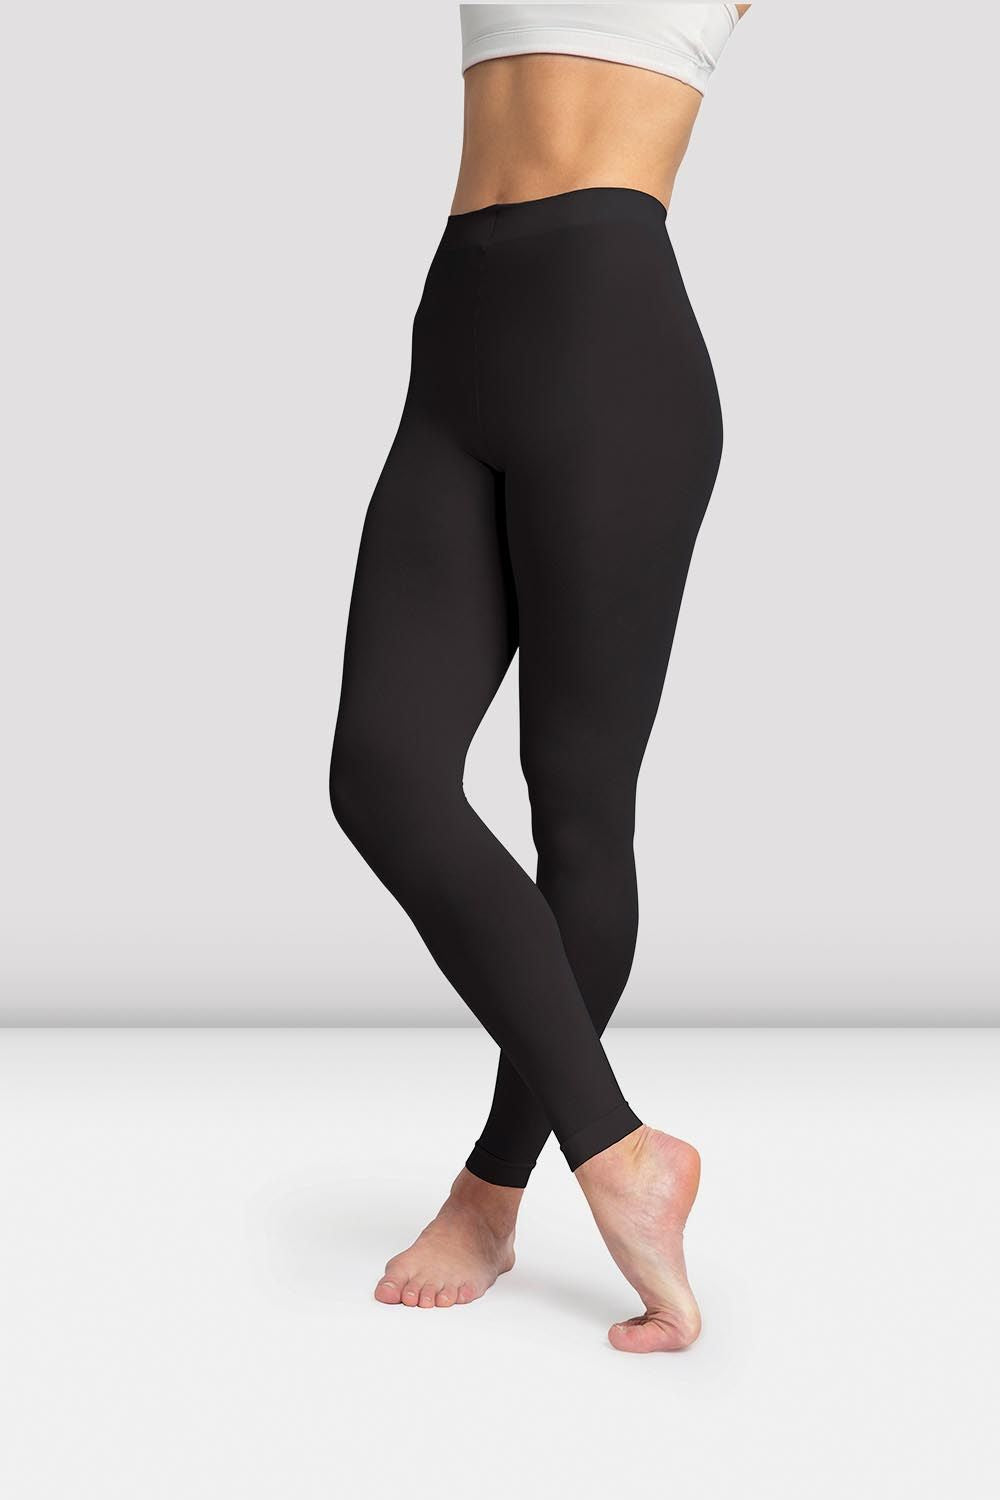 Women's H Halston HTFT501 Fleece Lined Ultra Soft Footless Tight - 2 Pack  (Black M/L) 